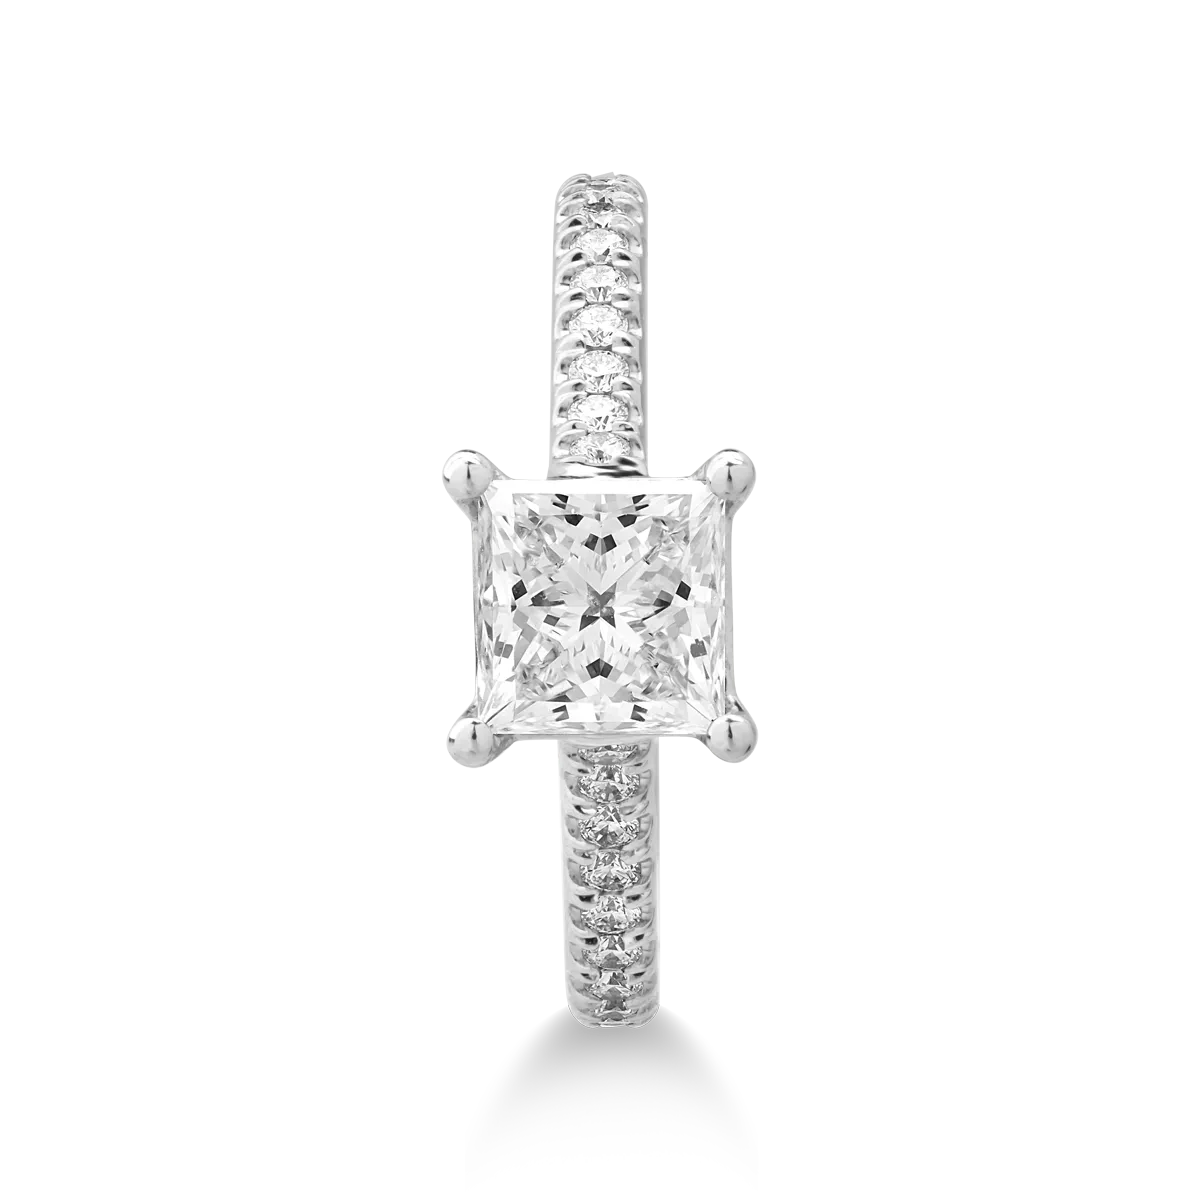 Diamond platinum engagement ring with 1.51ct diamond and 0.33ct diamonds